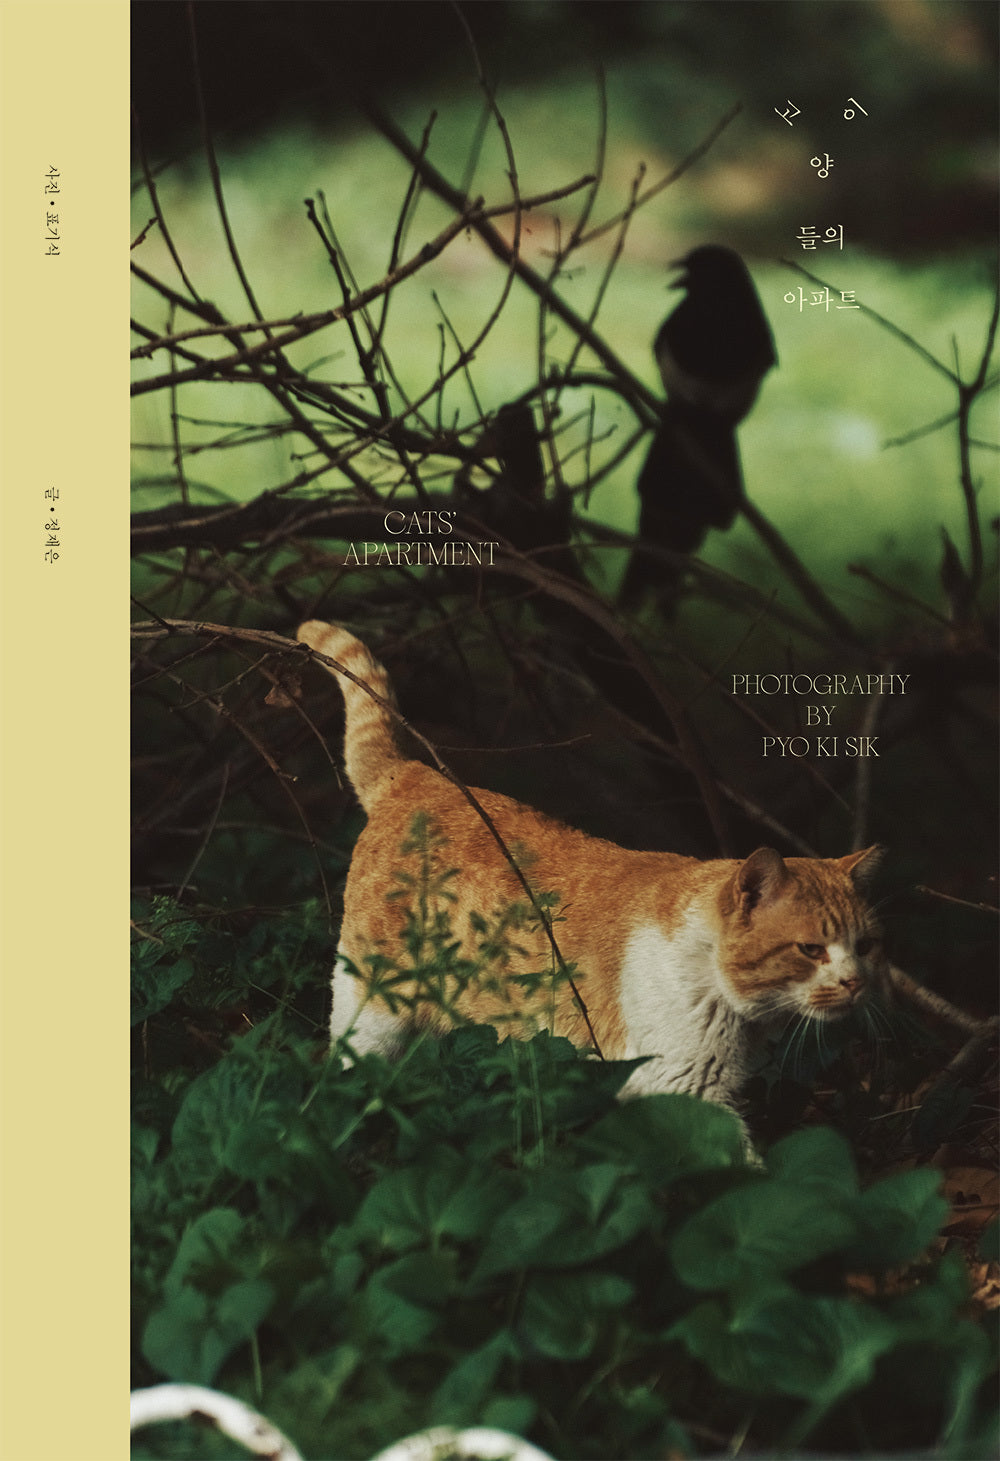 Cats’ Apartment: A Pyo Ki Sik Photobook